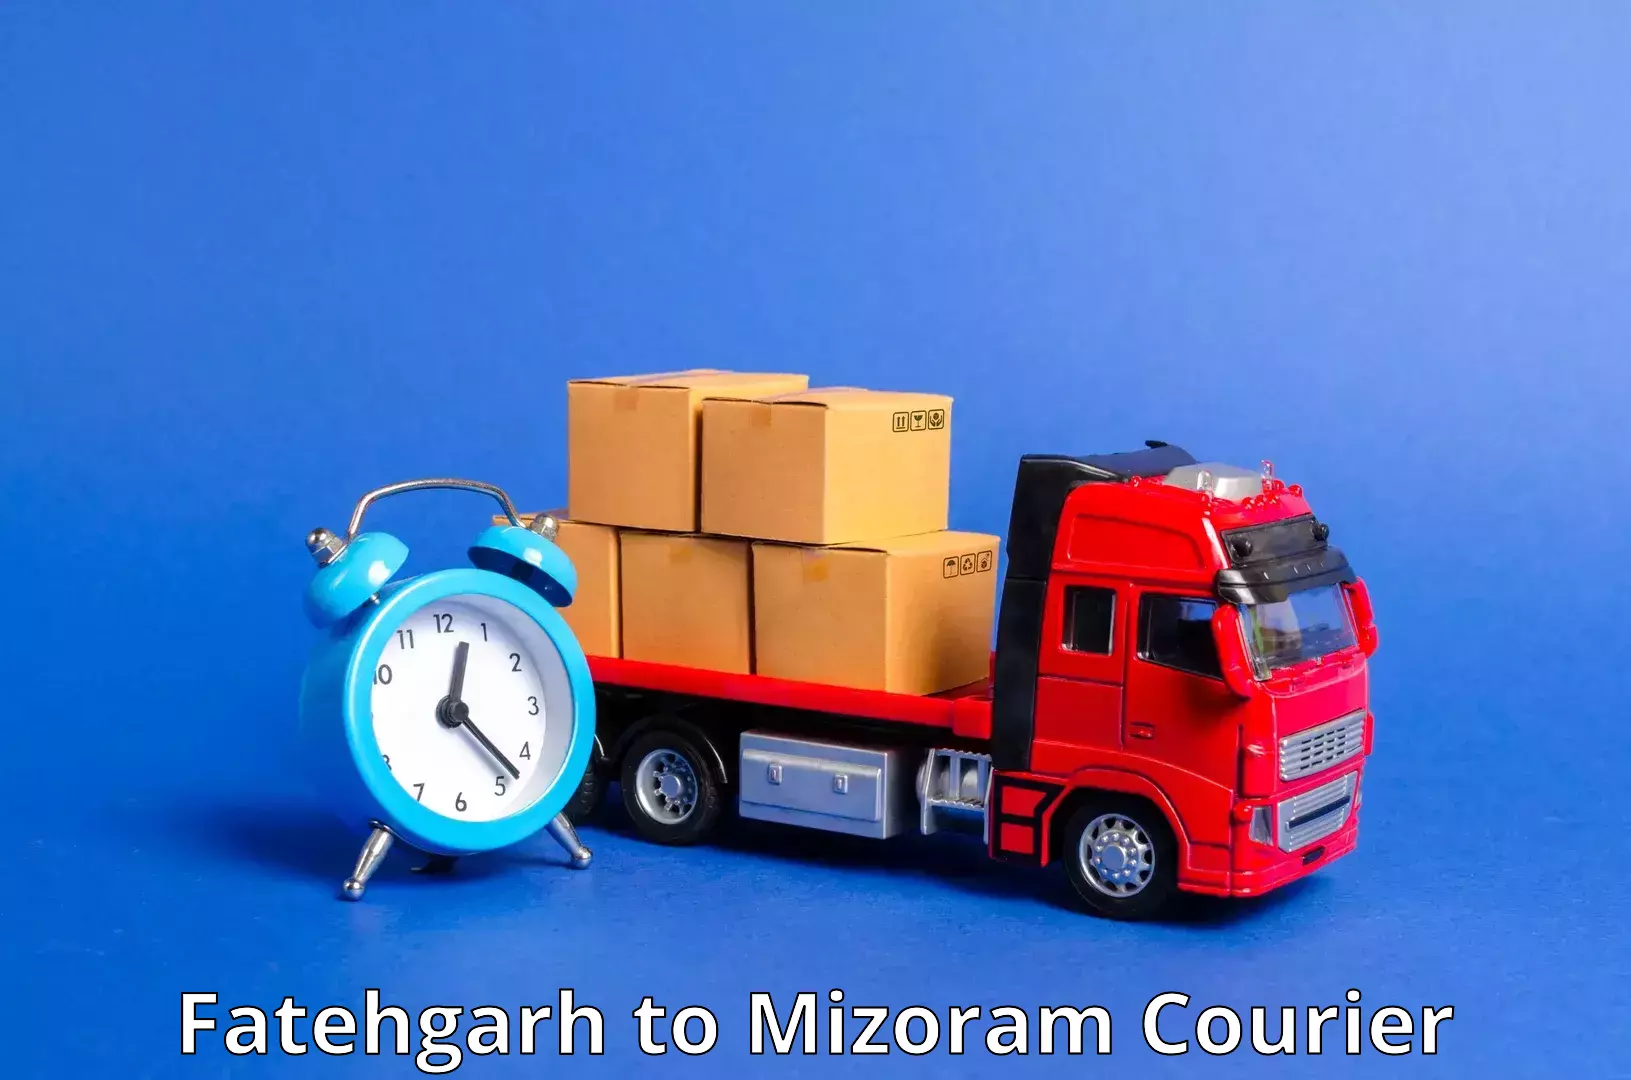 Global logistics network Fatehgarh to Aizawl